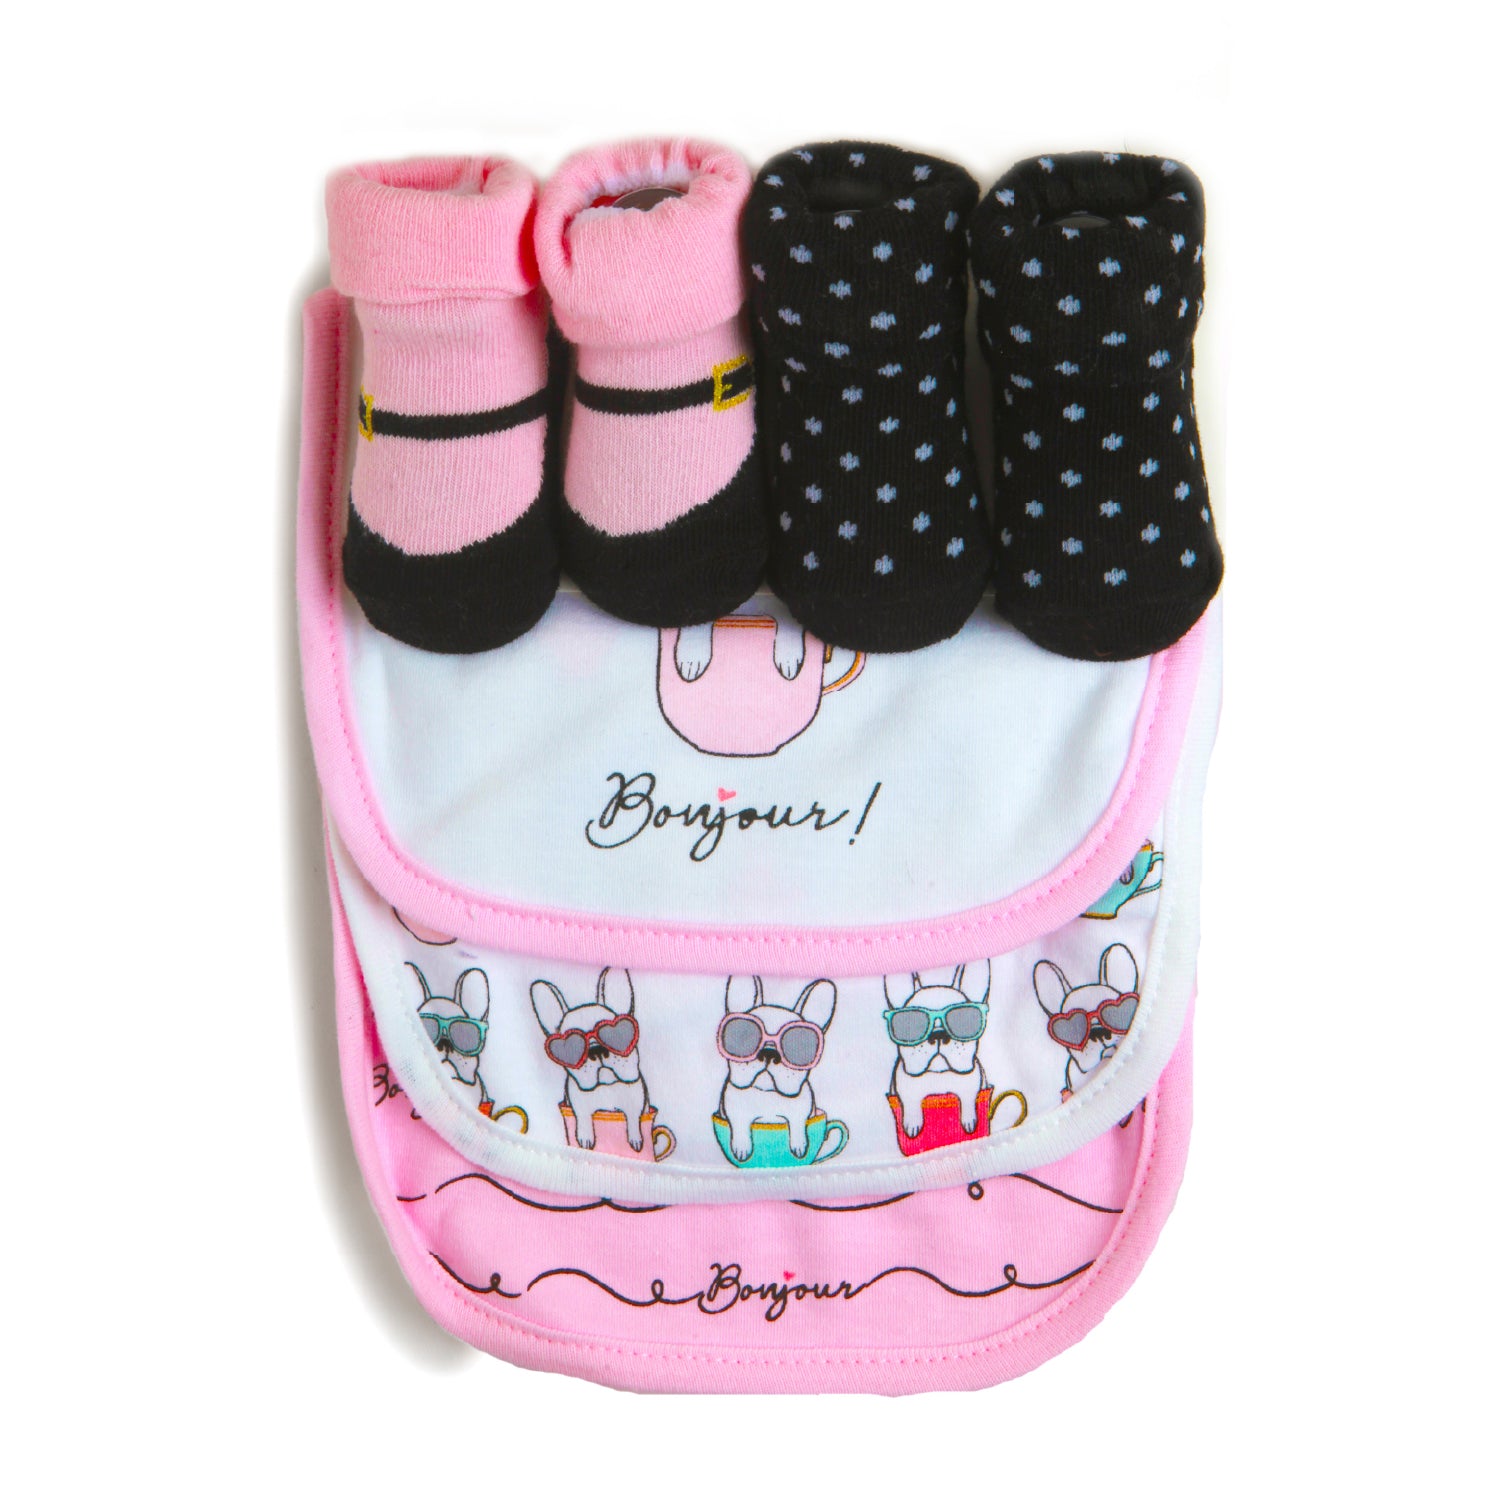 Dreaming Of Paris Pink And Black Set Of 3 Bibs And 2 Socks - Baby Moo